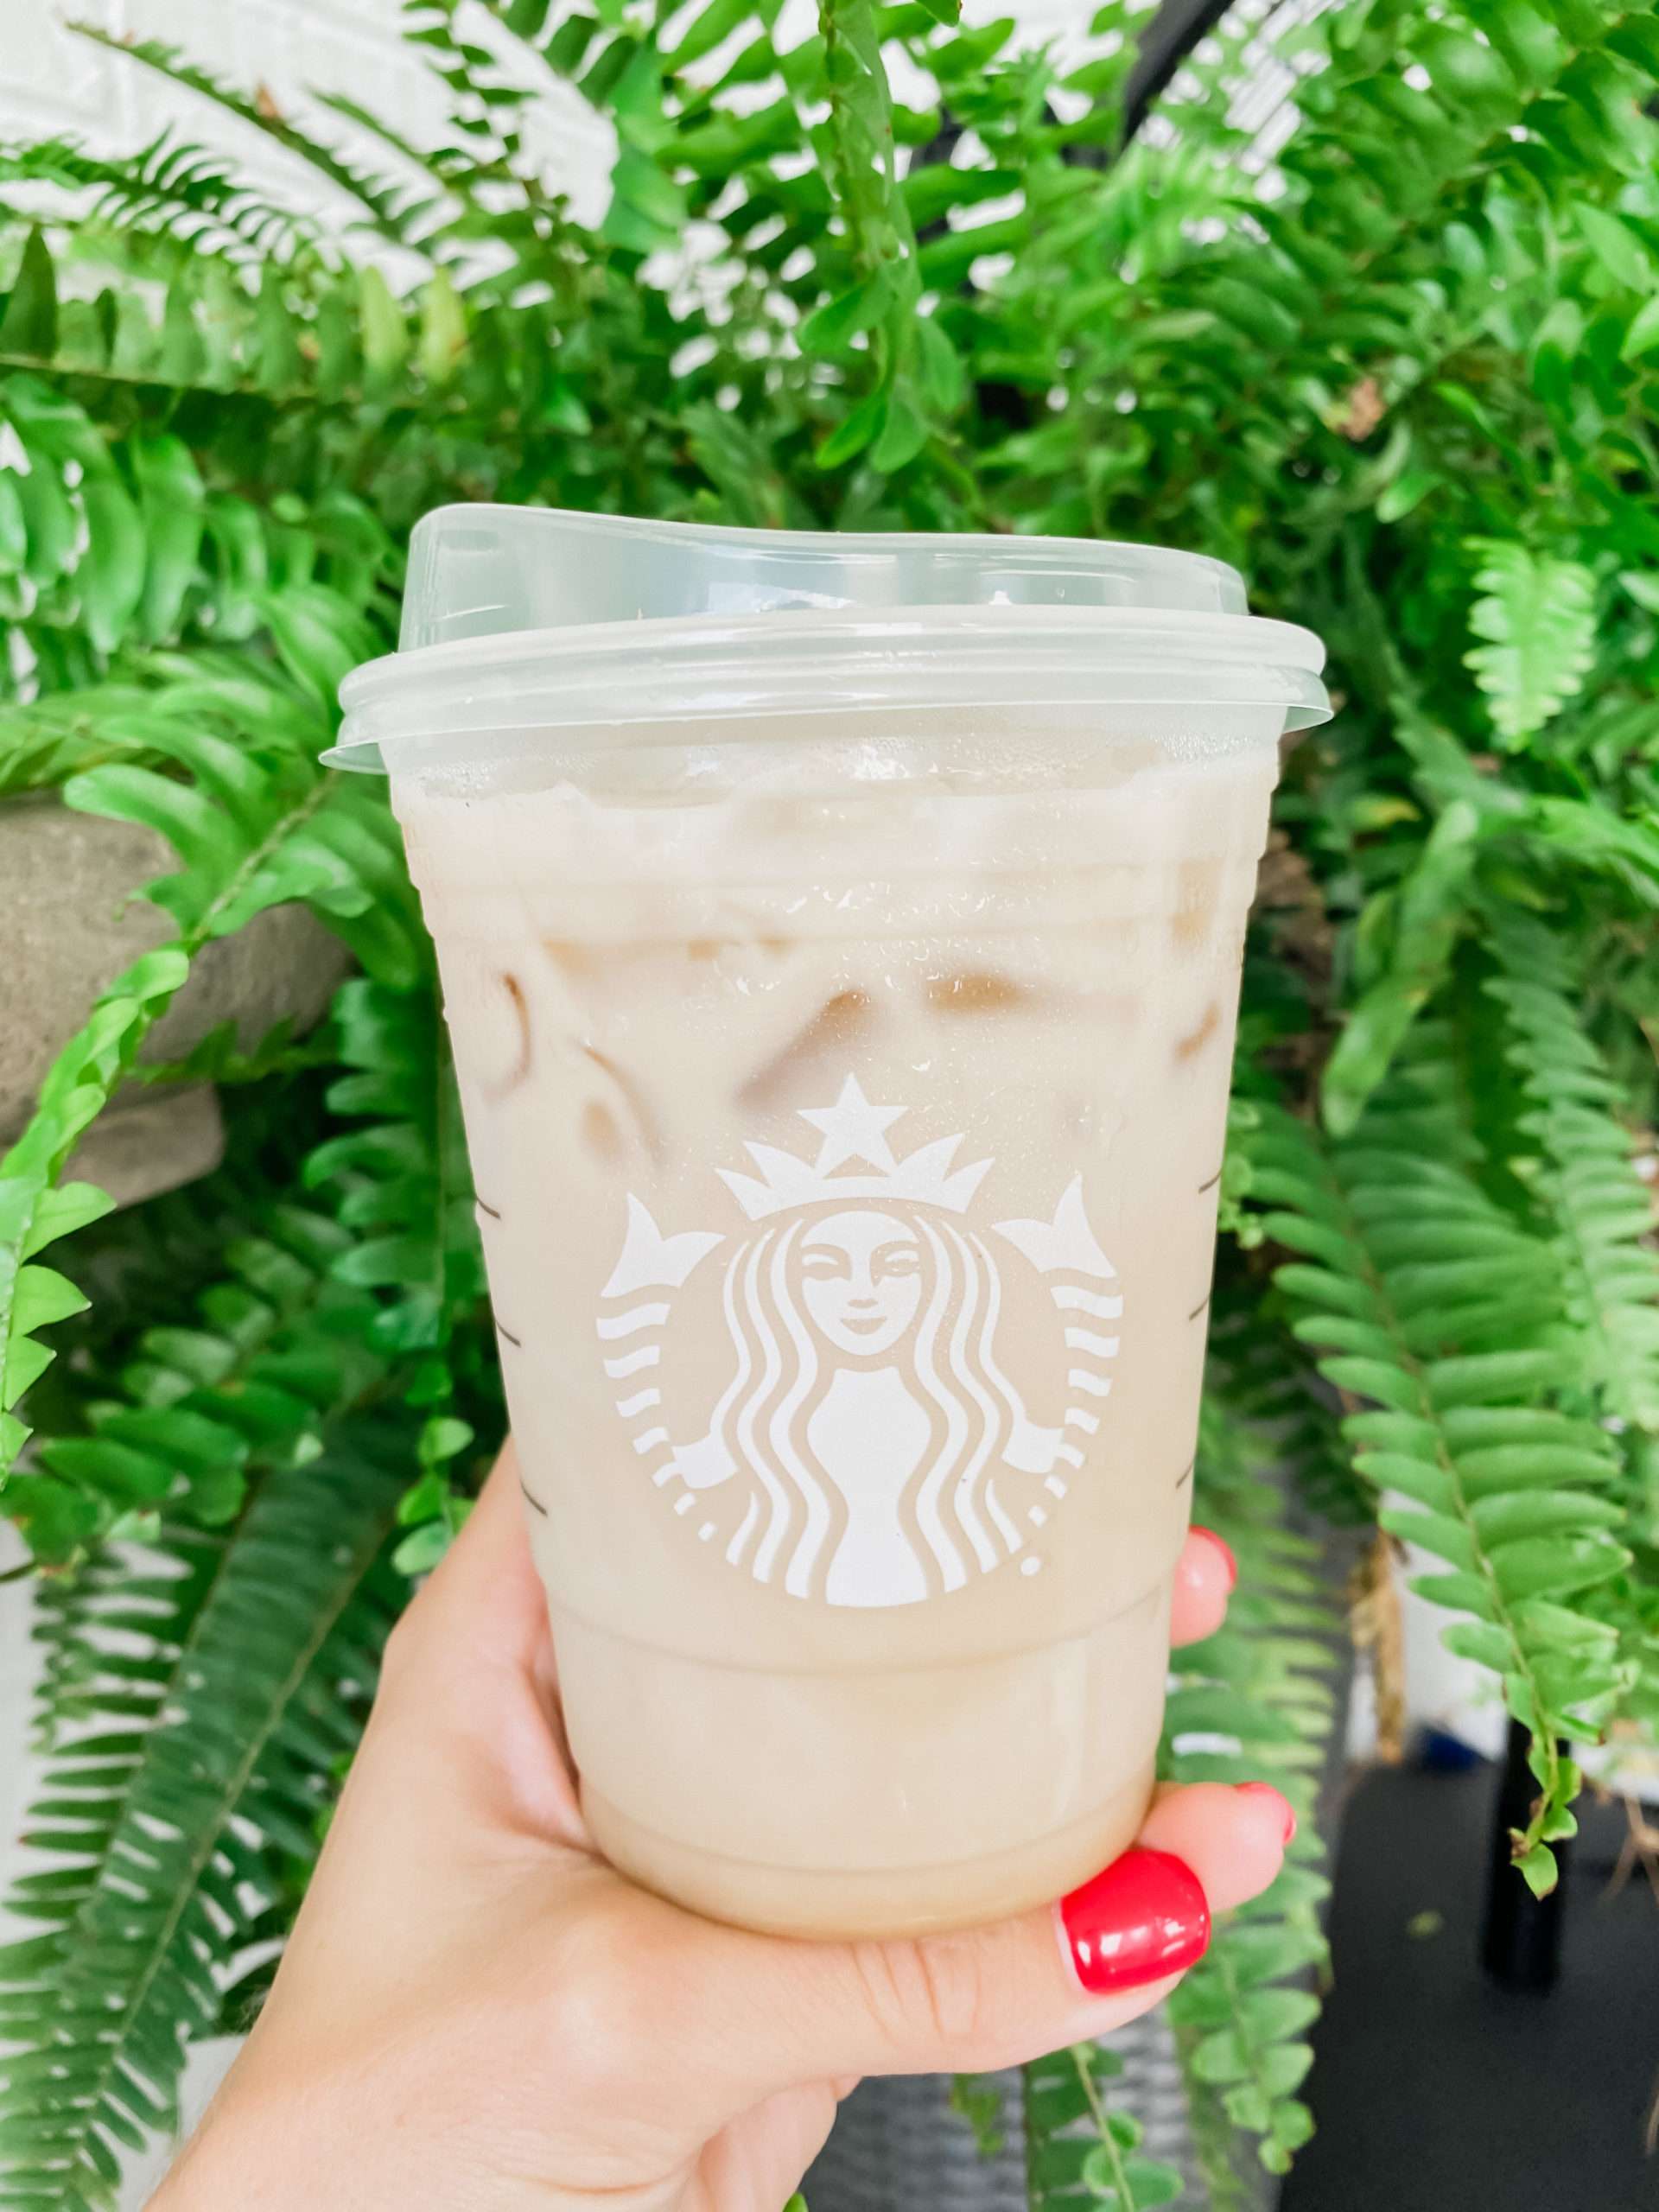 Healthy Dirty Chai Tea Latte Starbucks Order: 80 Cals